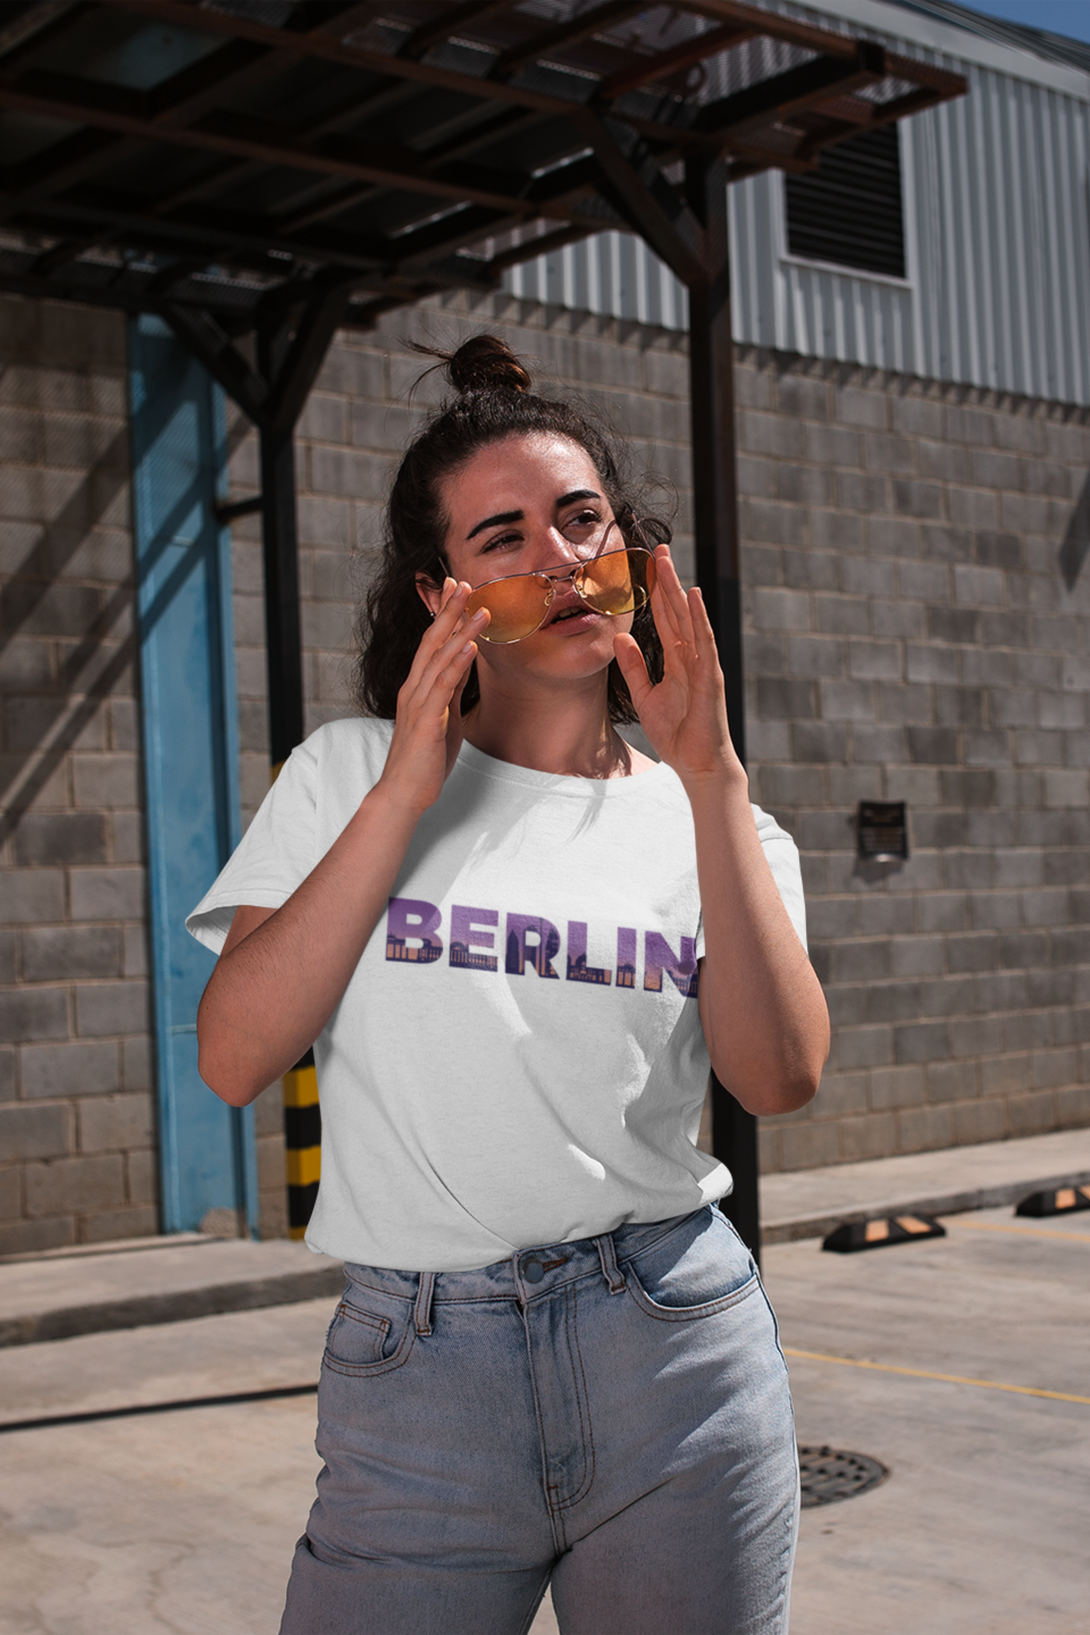 Berlin Skyline Printed T-Shirt For Women - WowWaves - 9